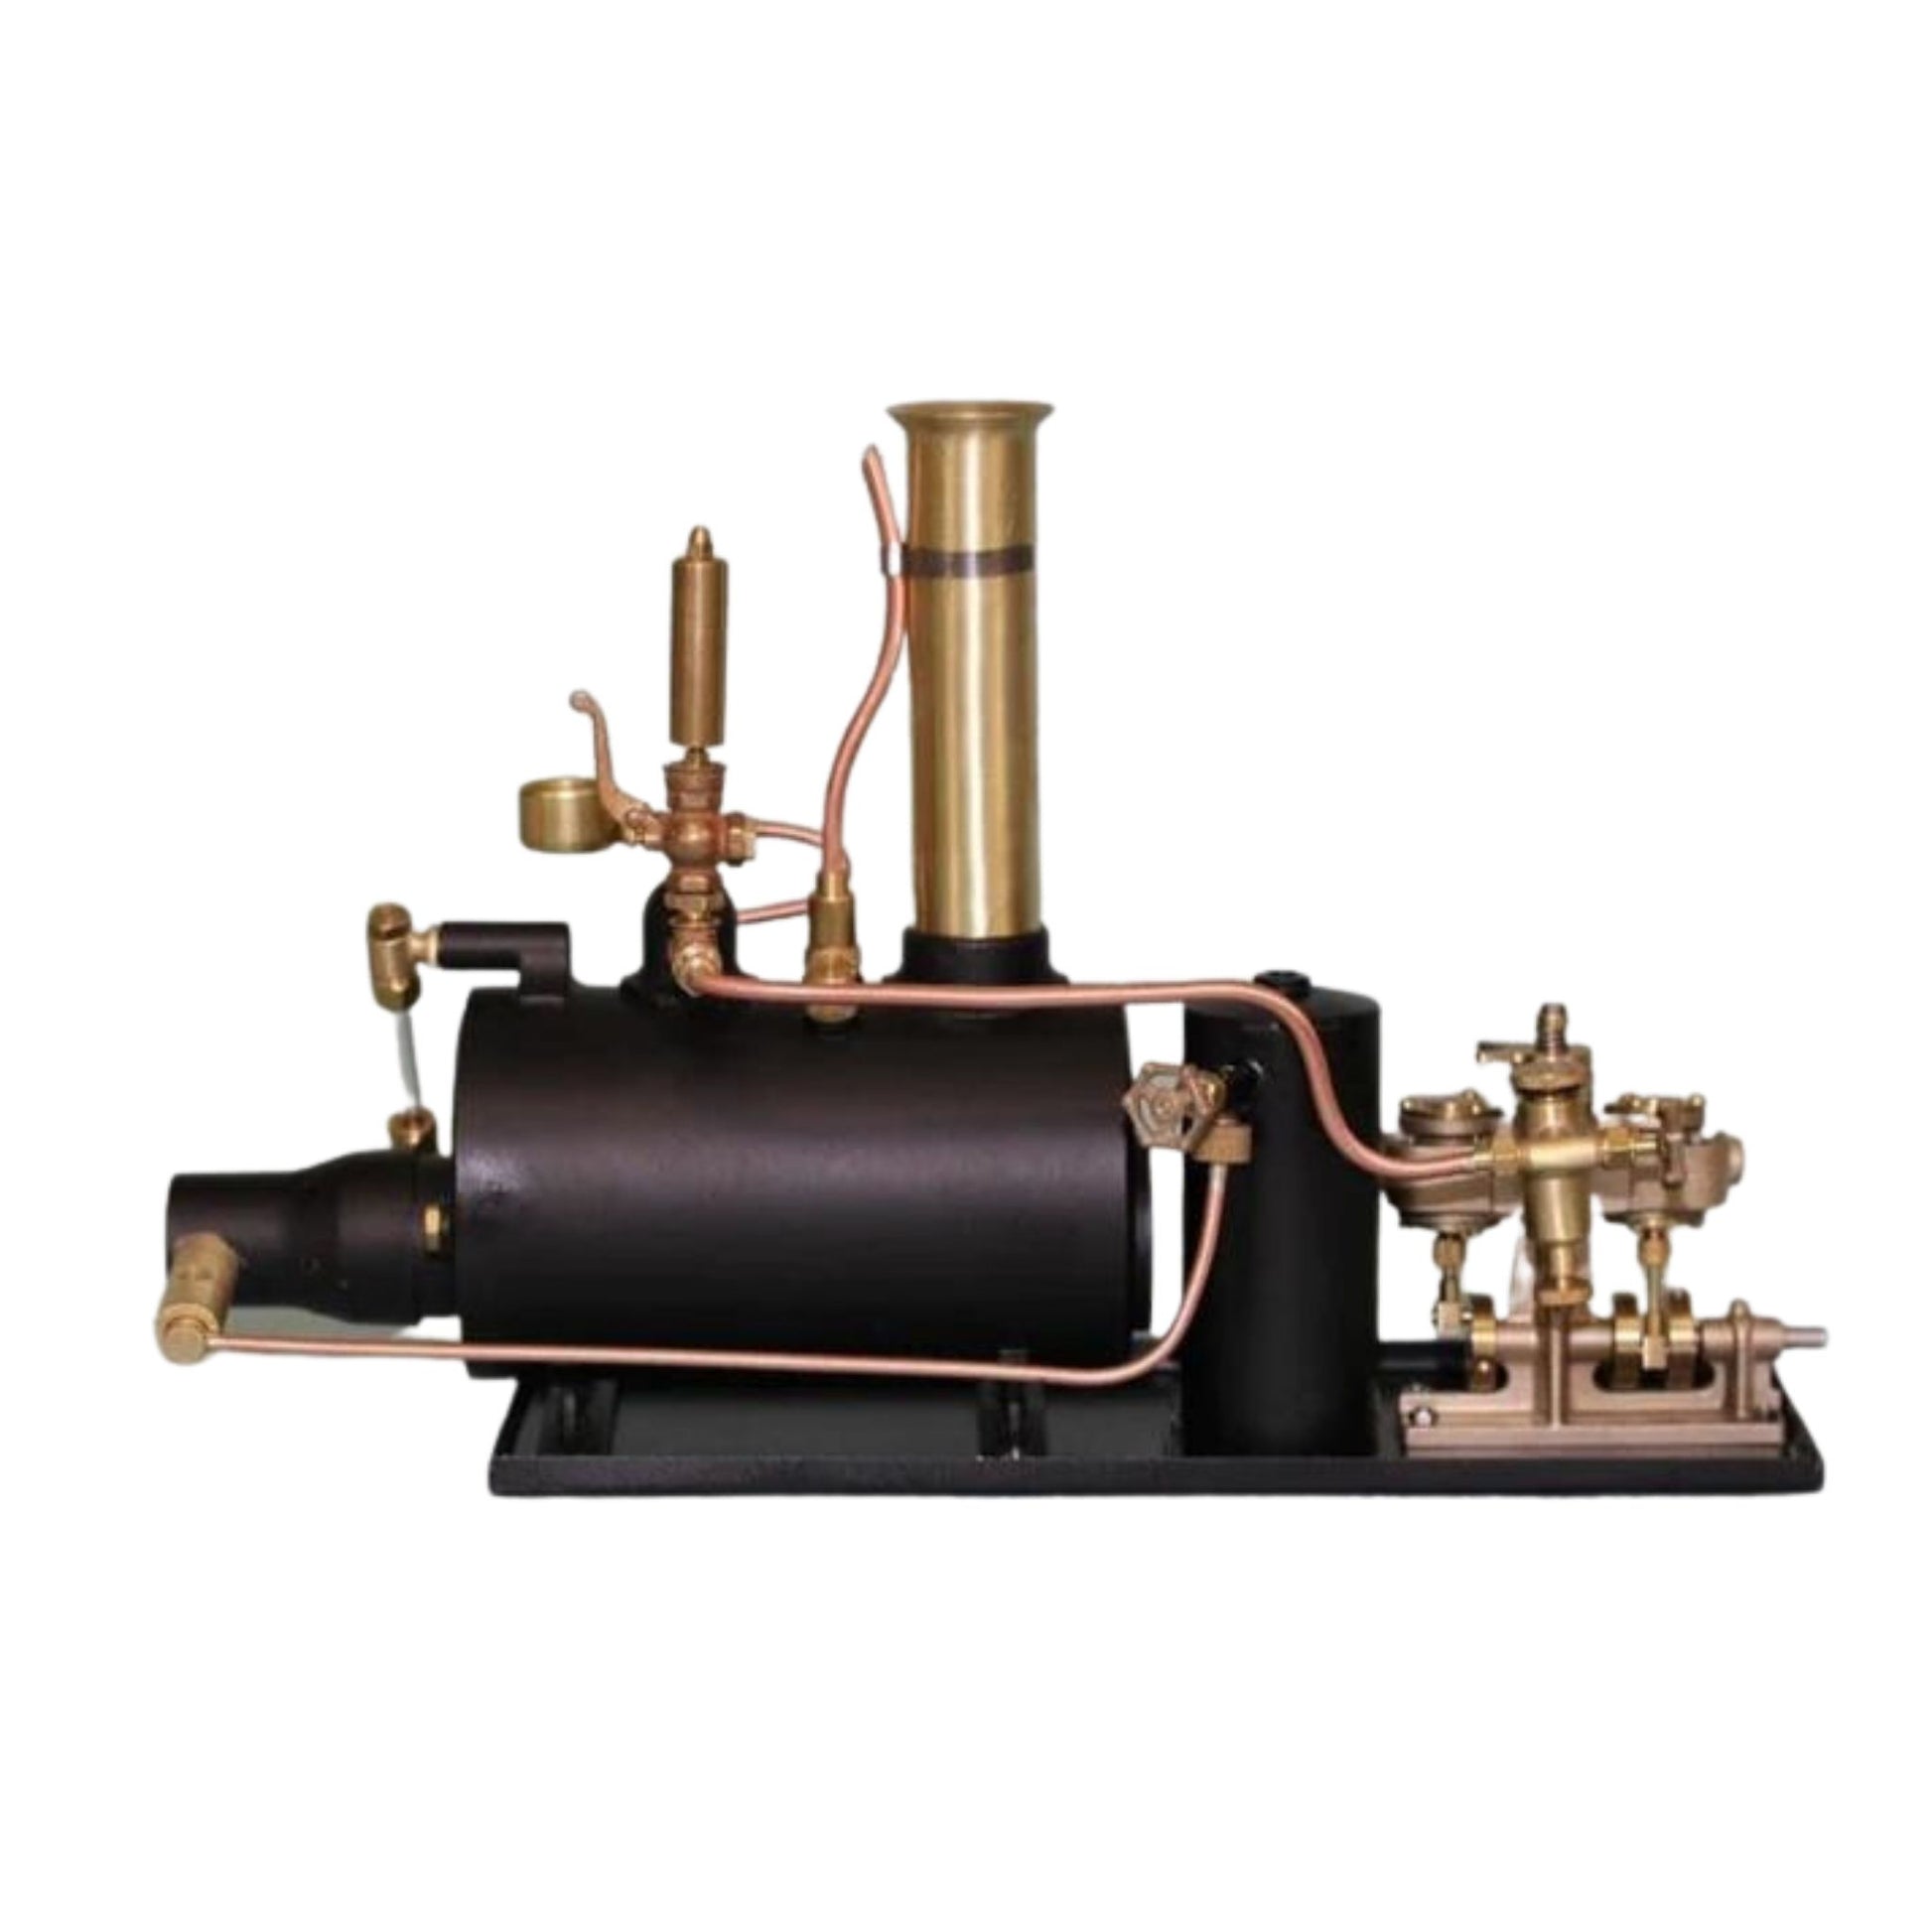 Horizontal Boiler Clyde Steam Plant- Assembled - Whistle